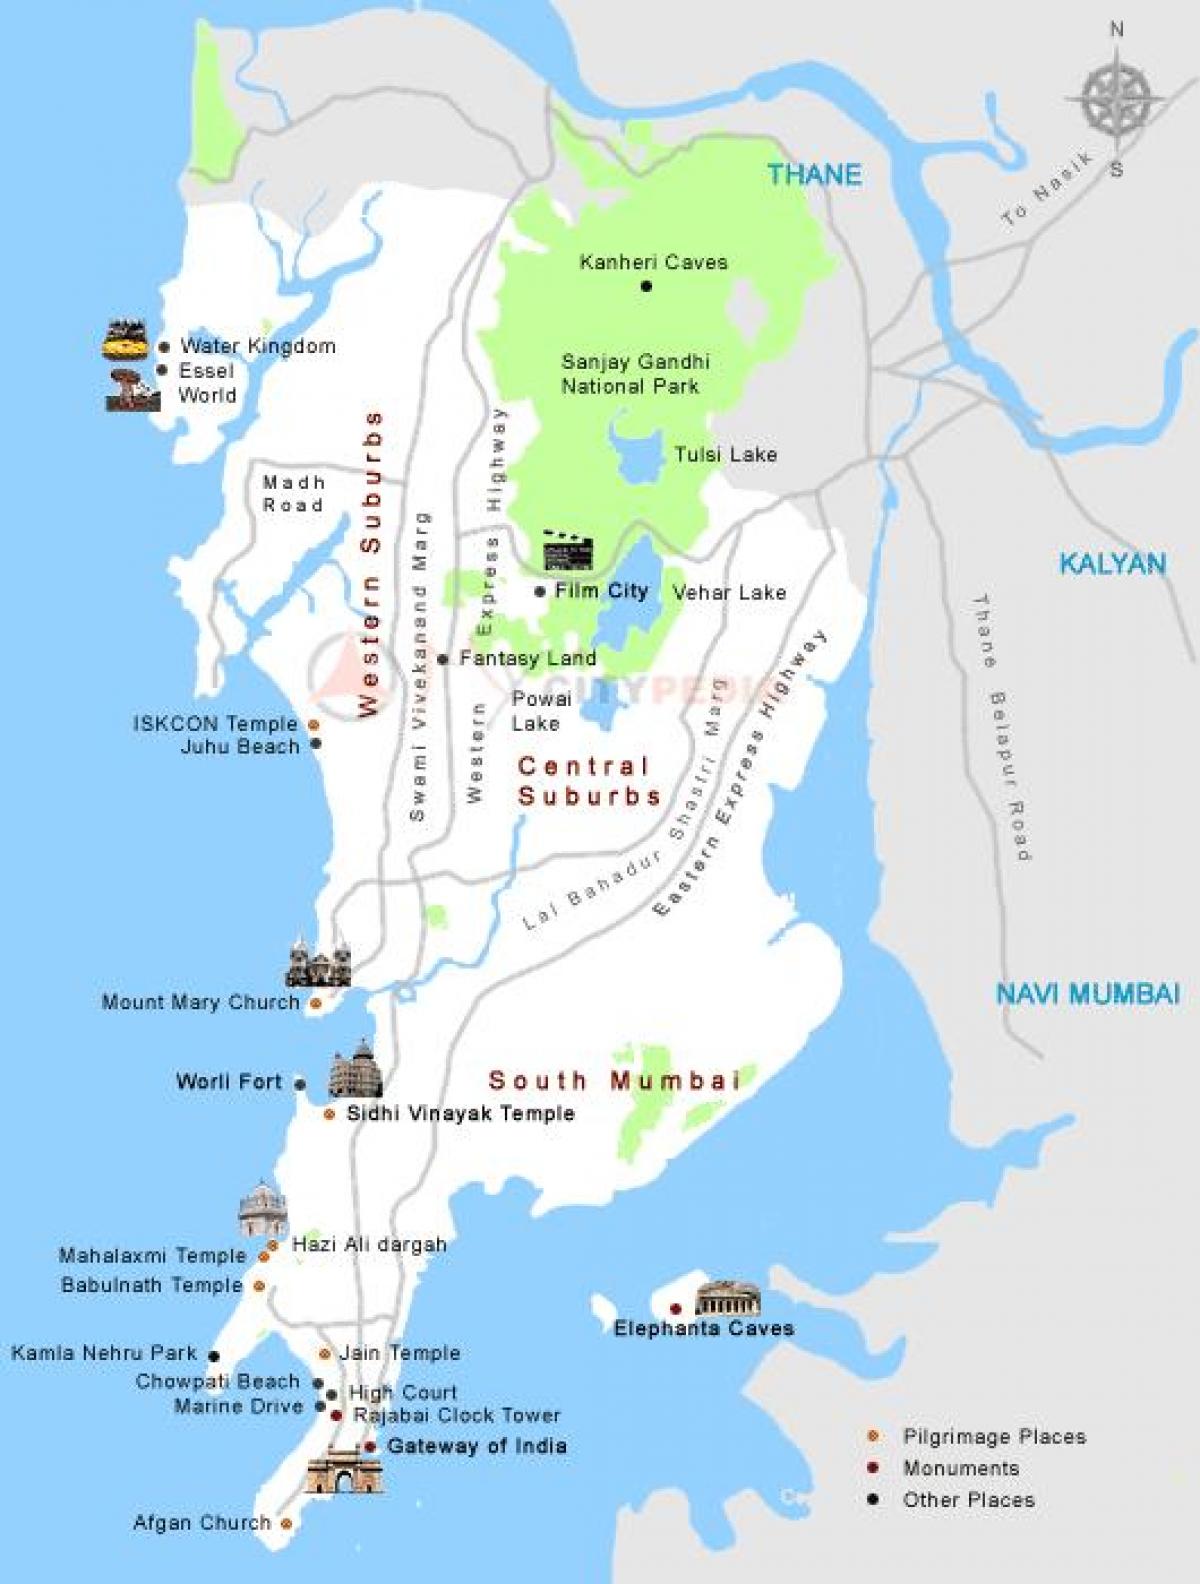 zemljevid Mumbaju turističnih krajih